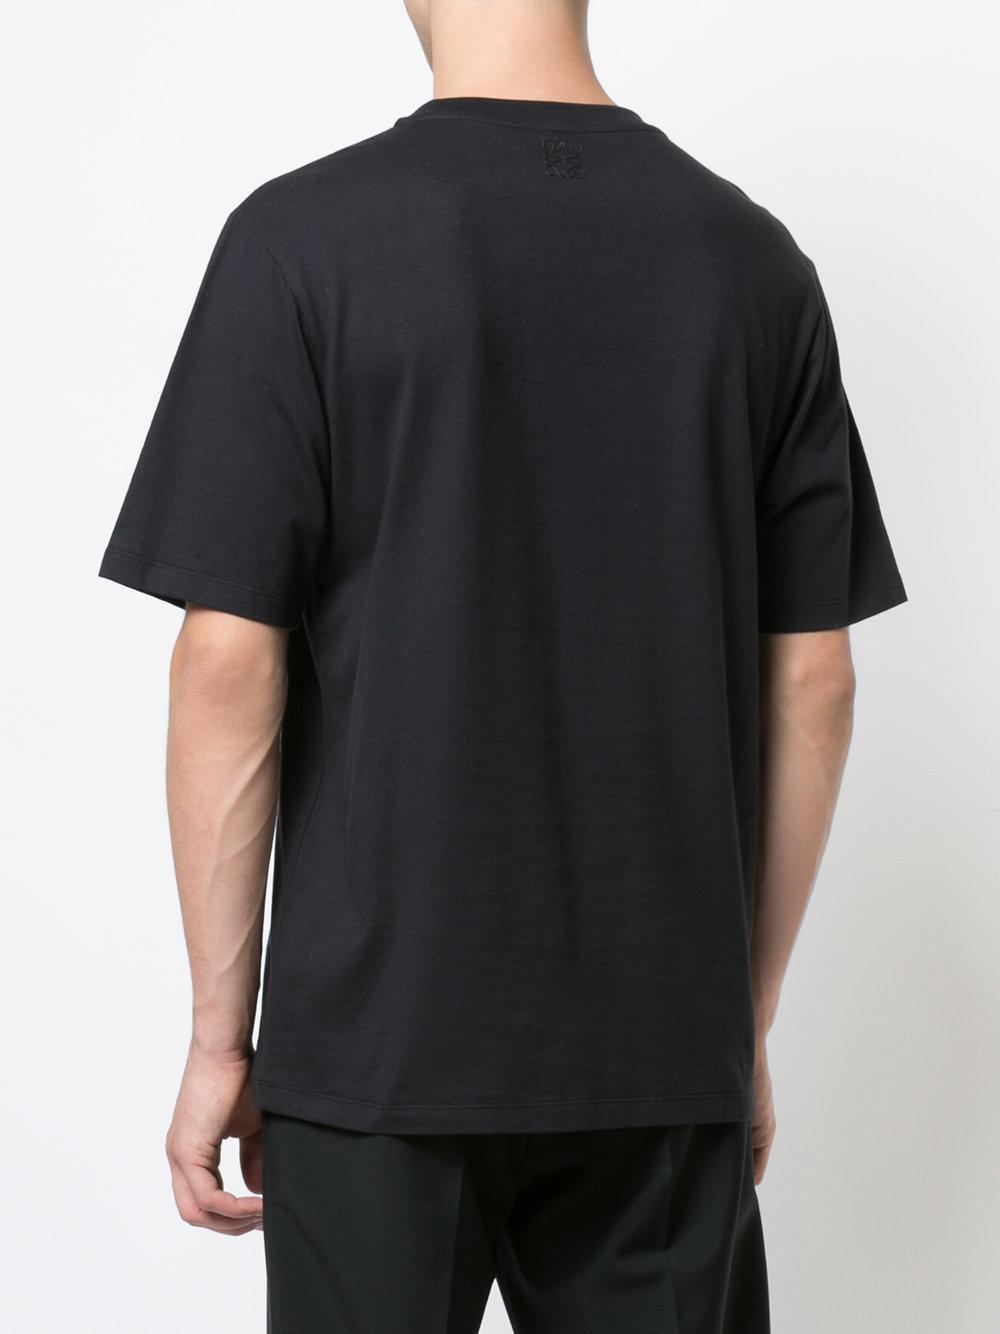 Lyst - Loewe & Co Print T-shirt in Black for Men